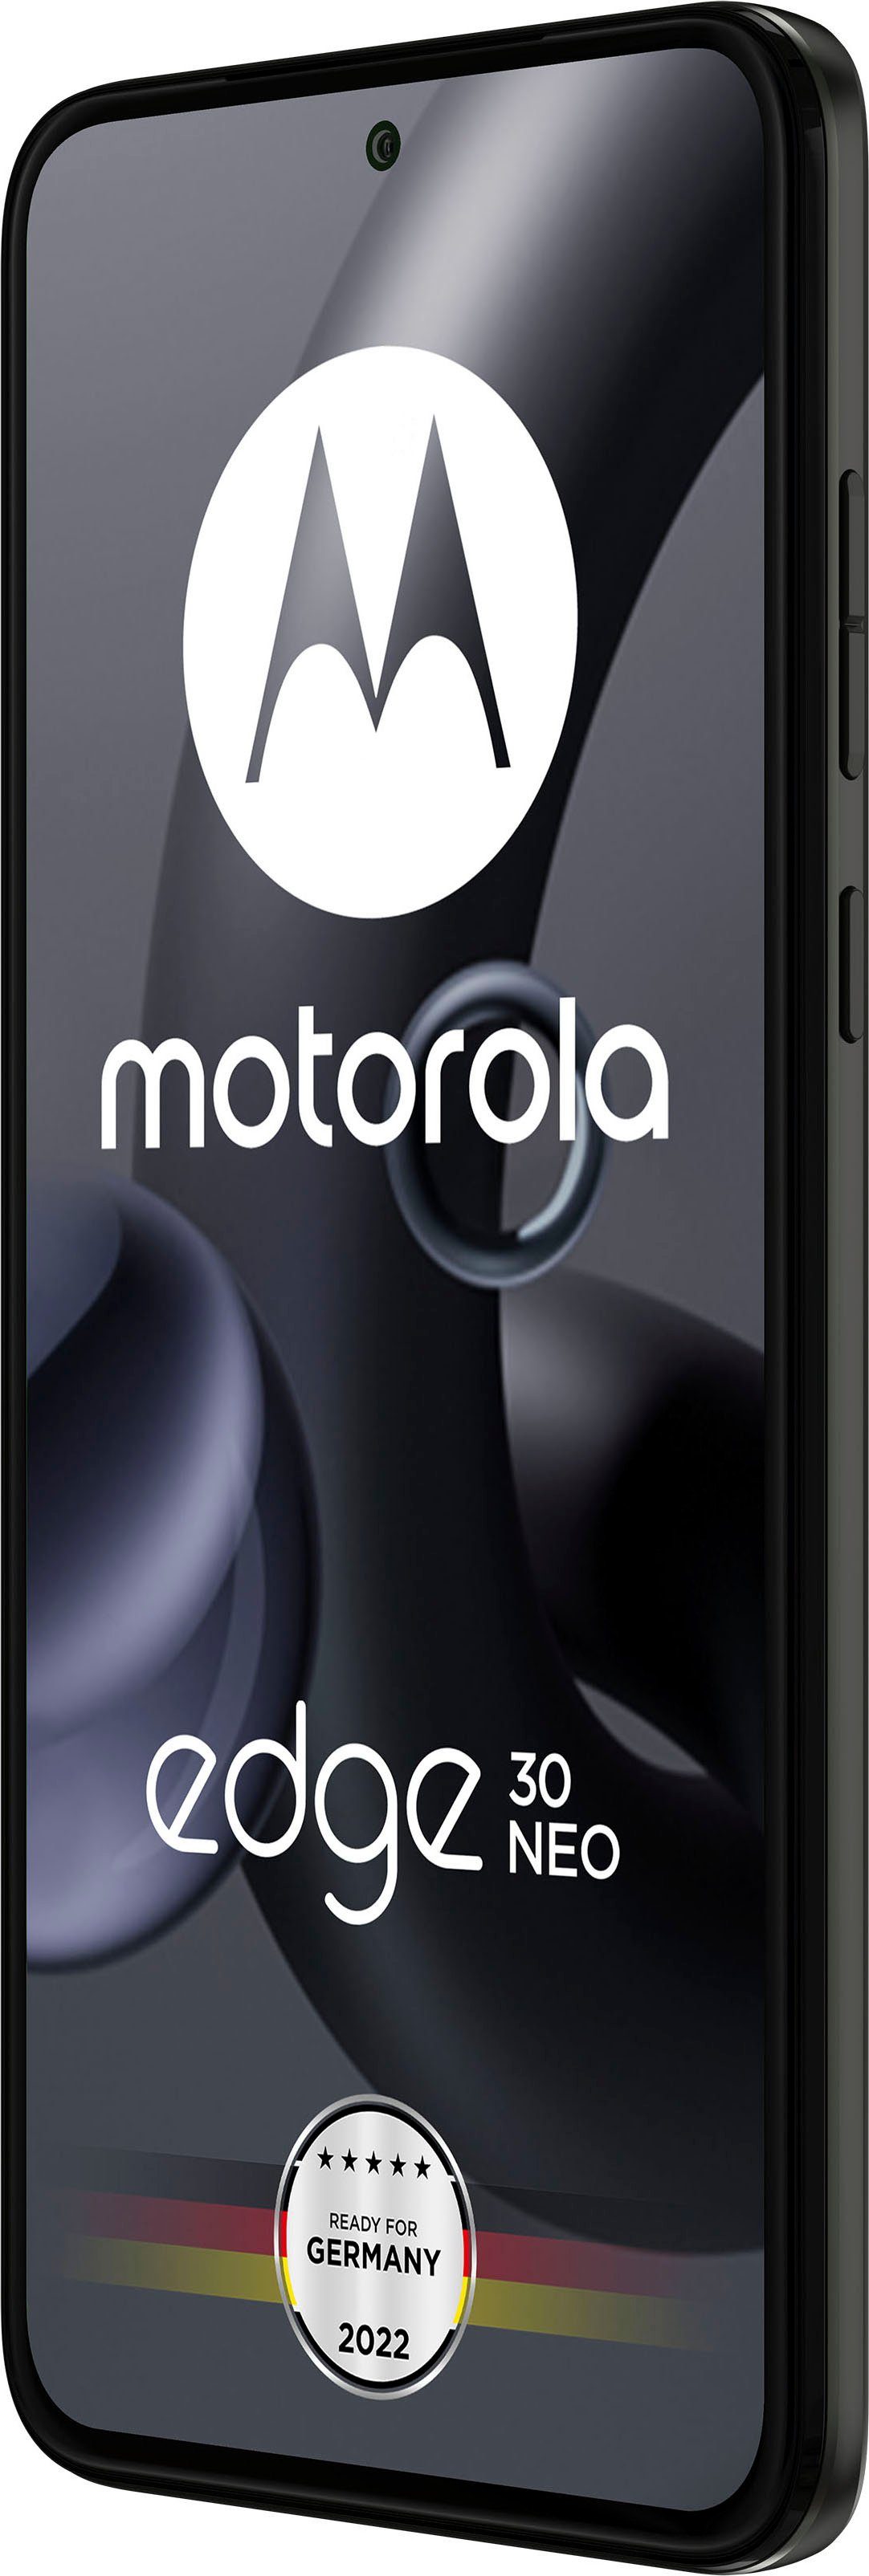 Motorola Edge 30 256 64 256 cm/6,3 Zoll, (16 Speicherplatz, Kamera) Neo Smartphone GB MP GB